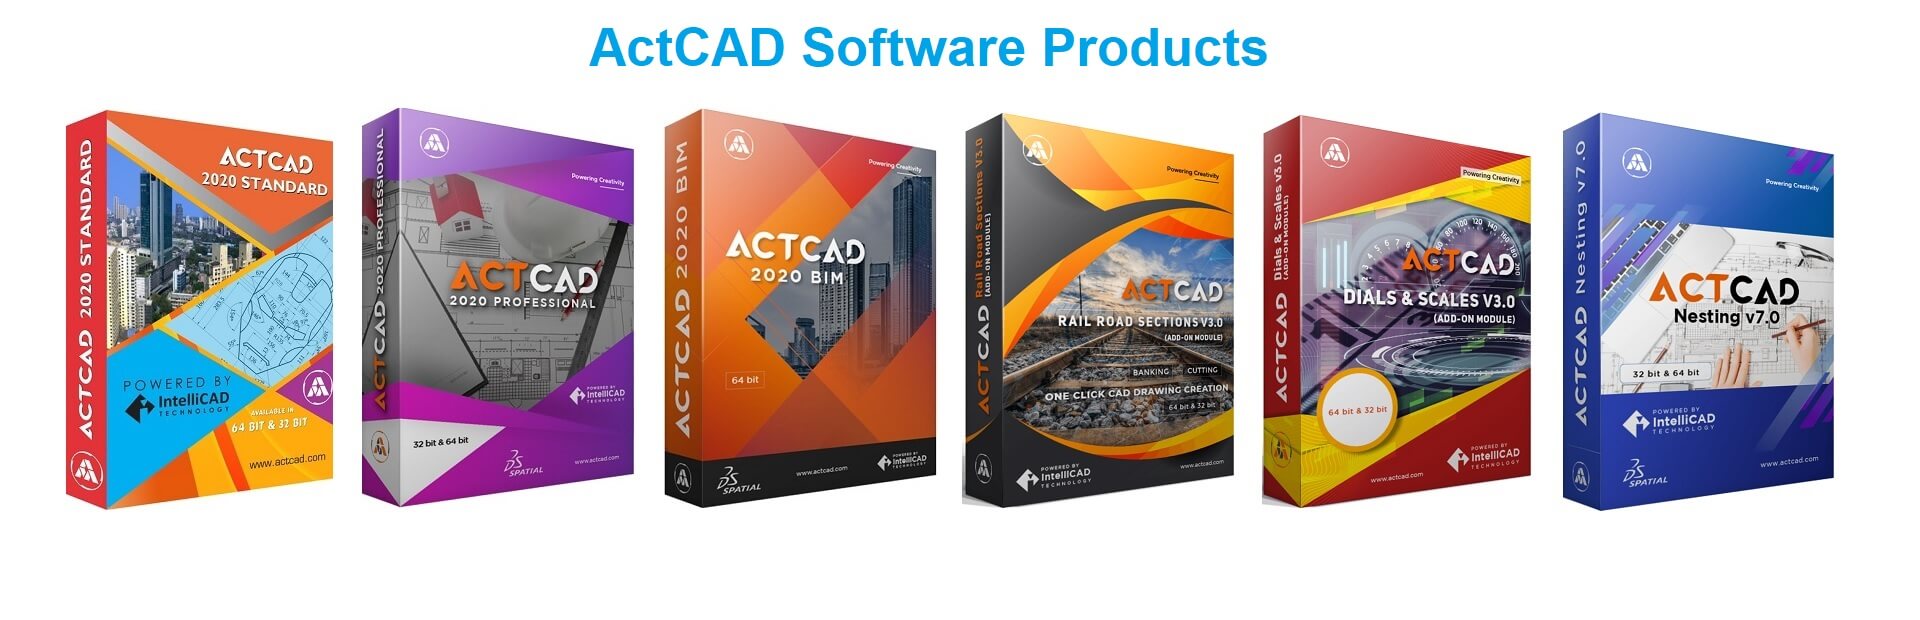 autodesk autocad software price in india